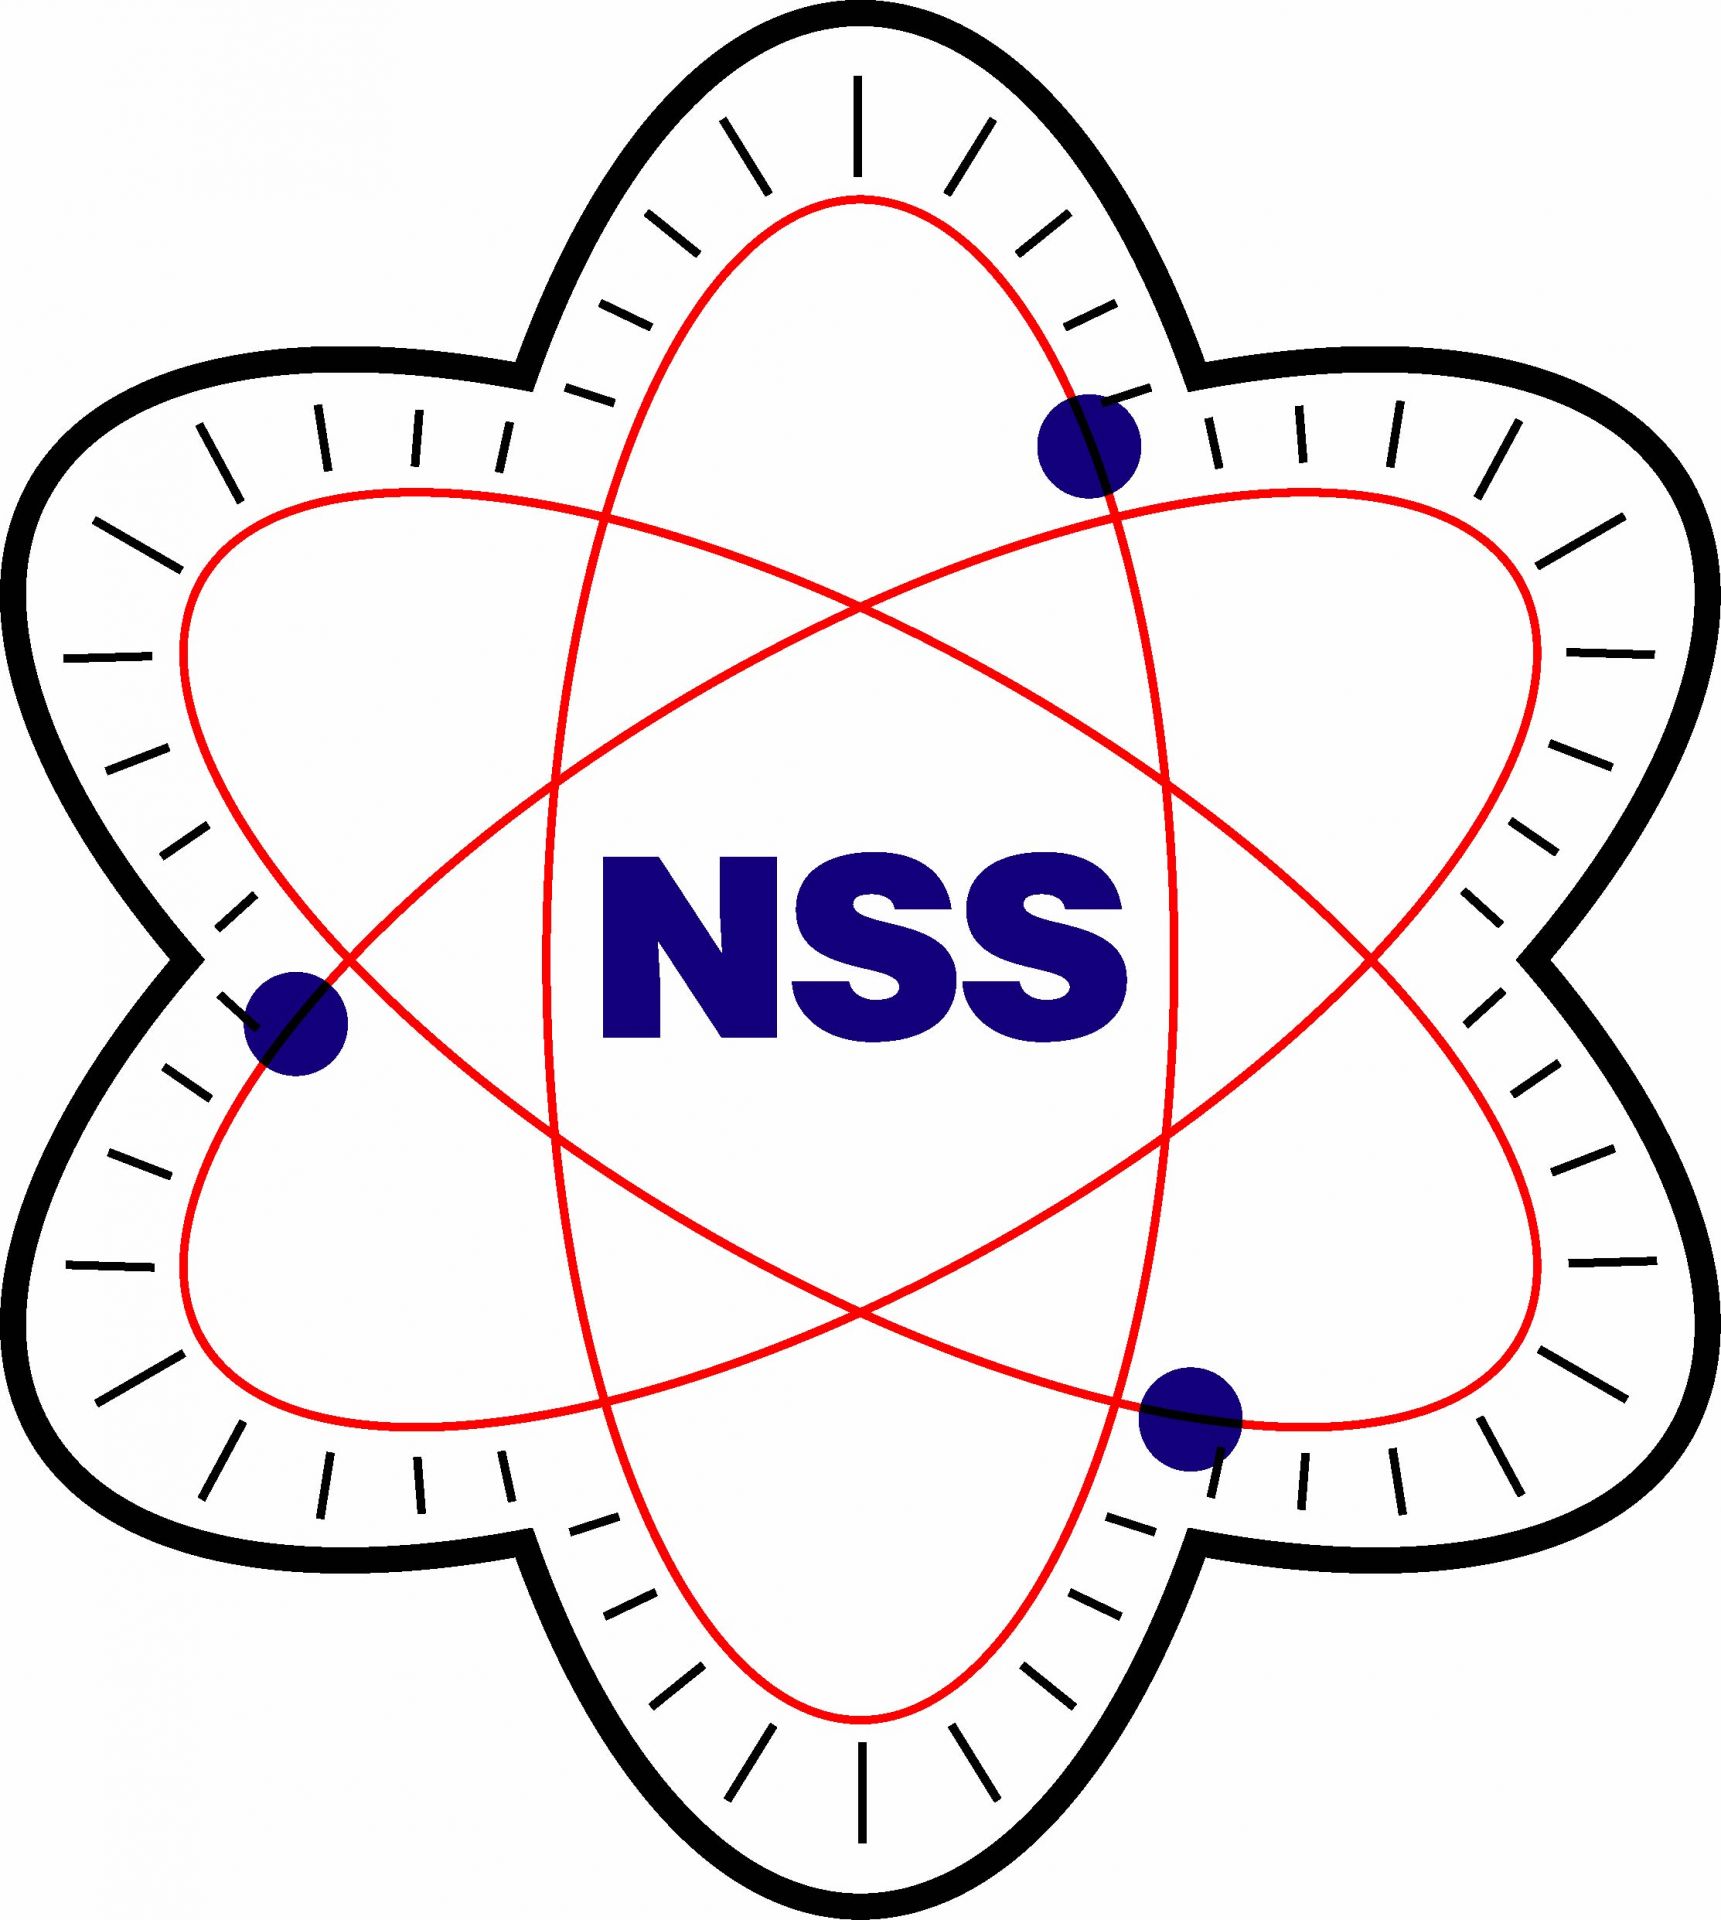 Nuclear Shielding Supplies & Service logo